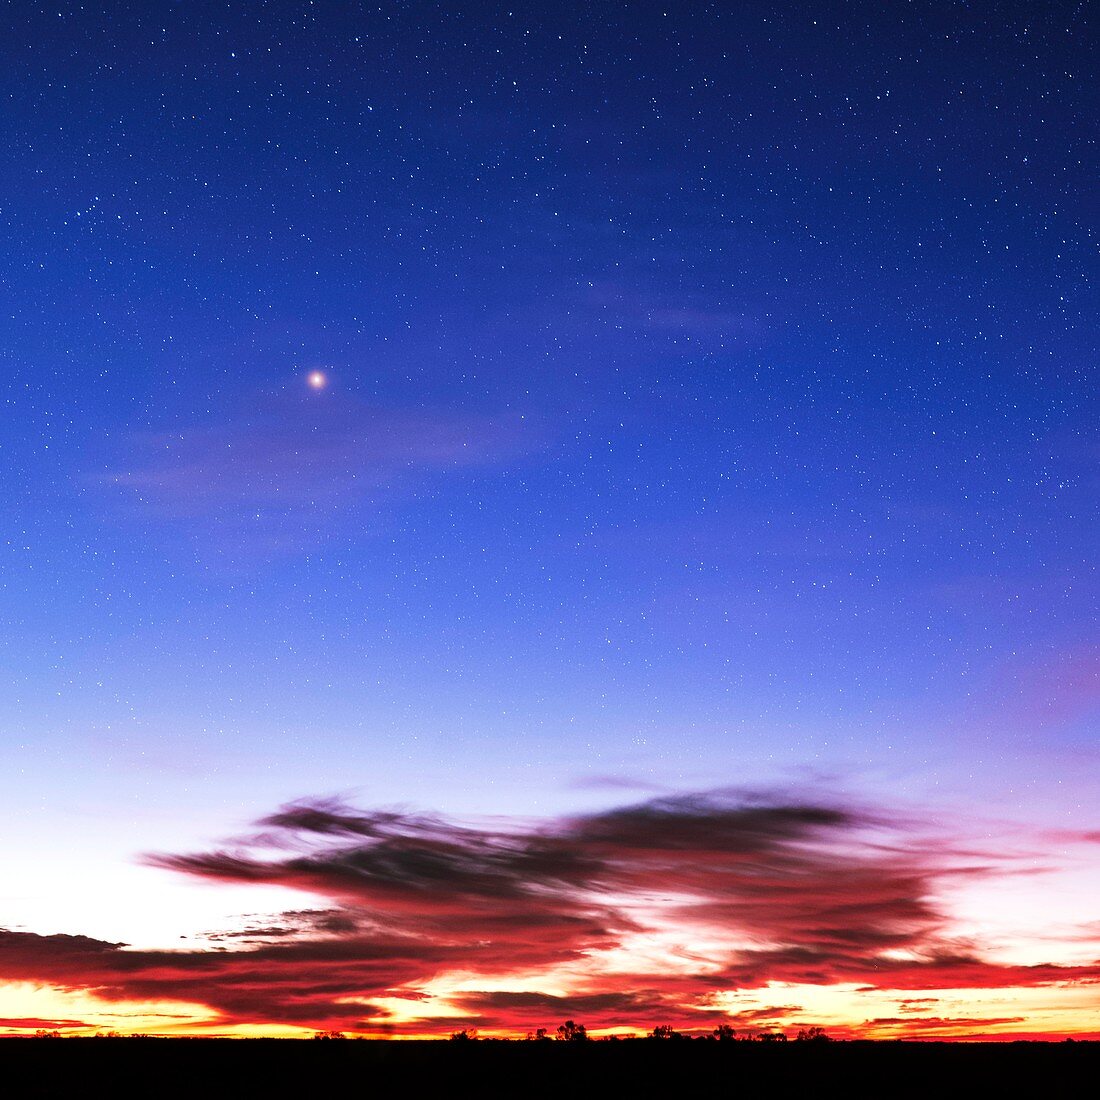 Night sky at dawn, Australia